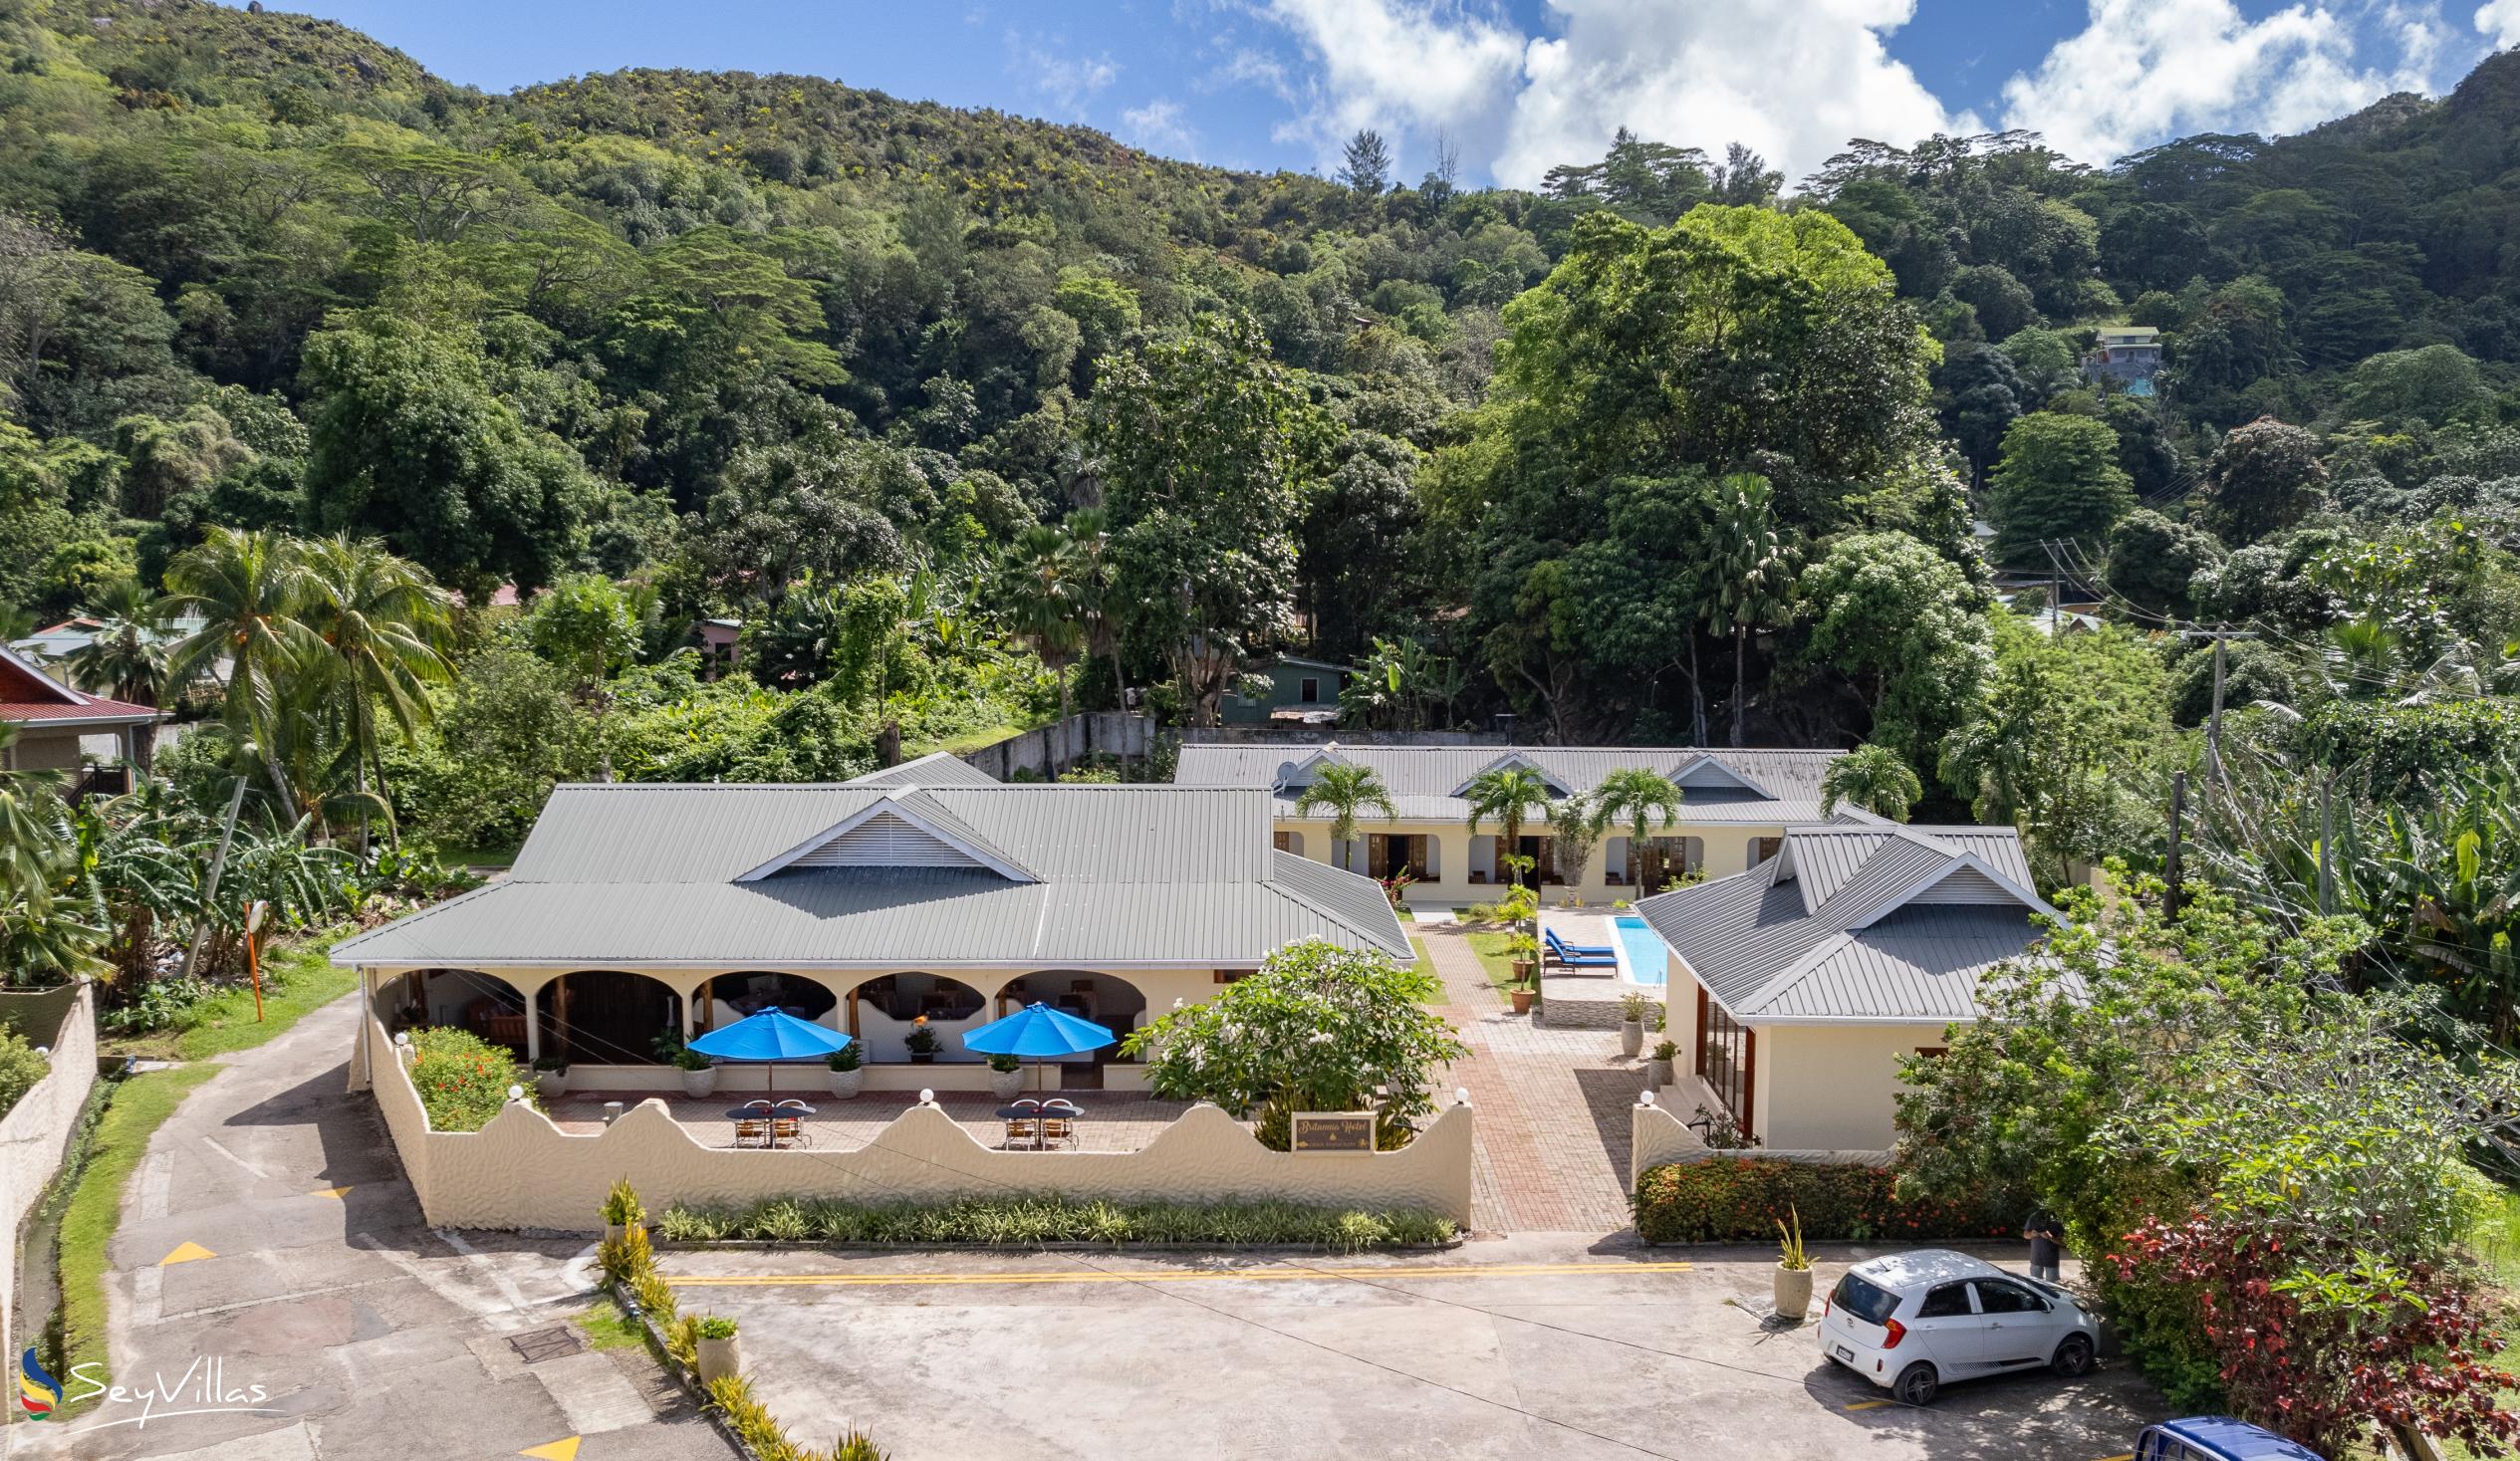 Photo 11: Britannia Hotel - Outdoor area - Praslin (Seychelles)